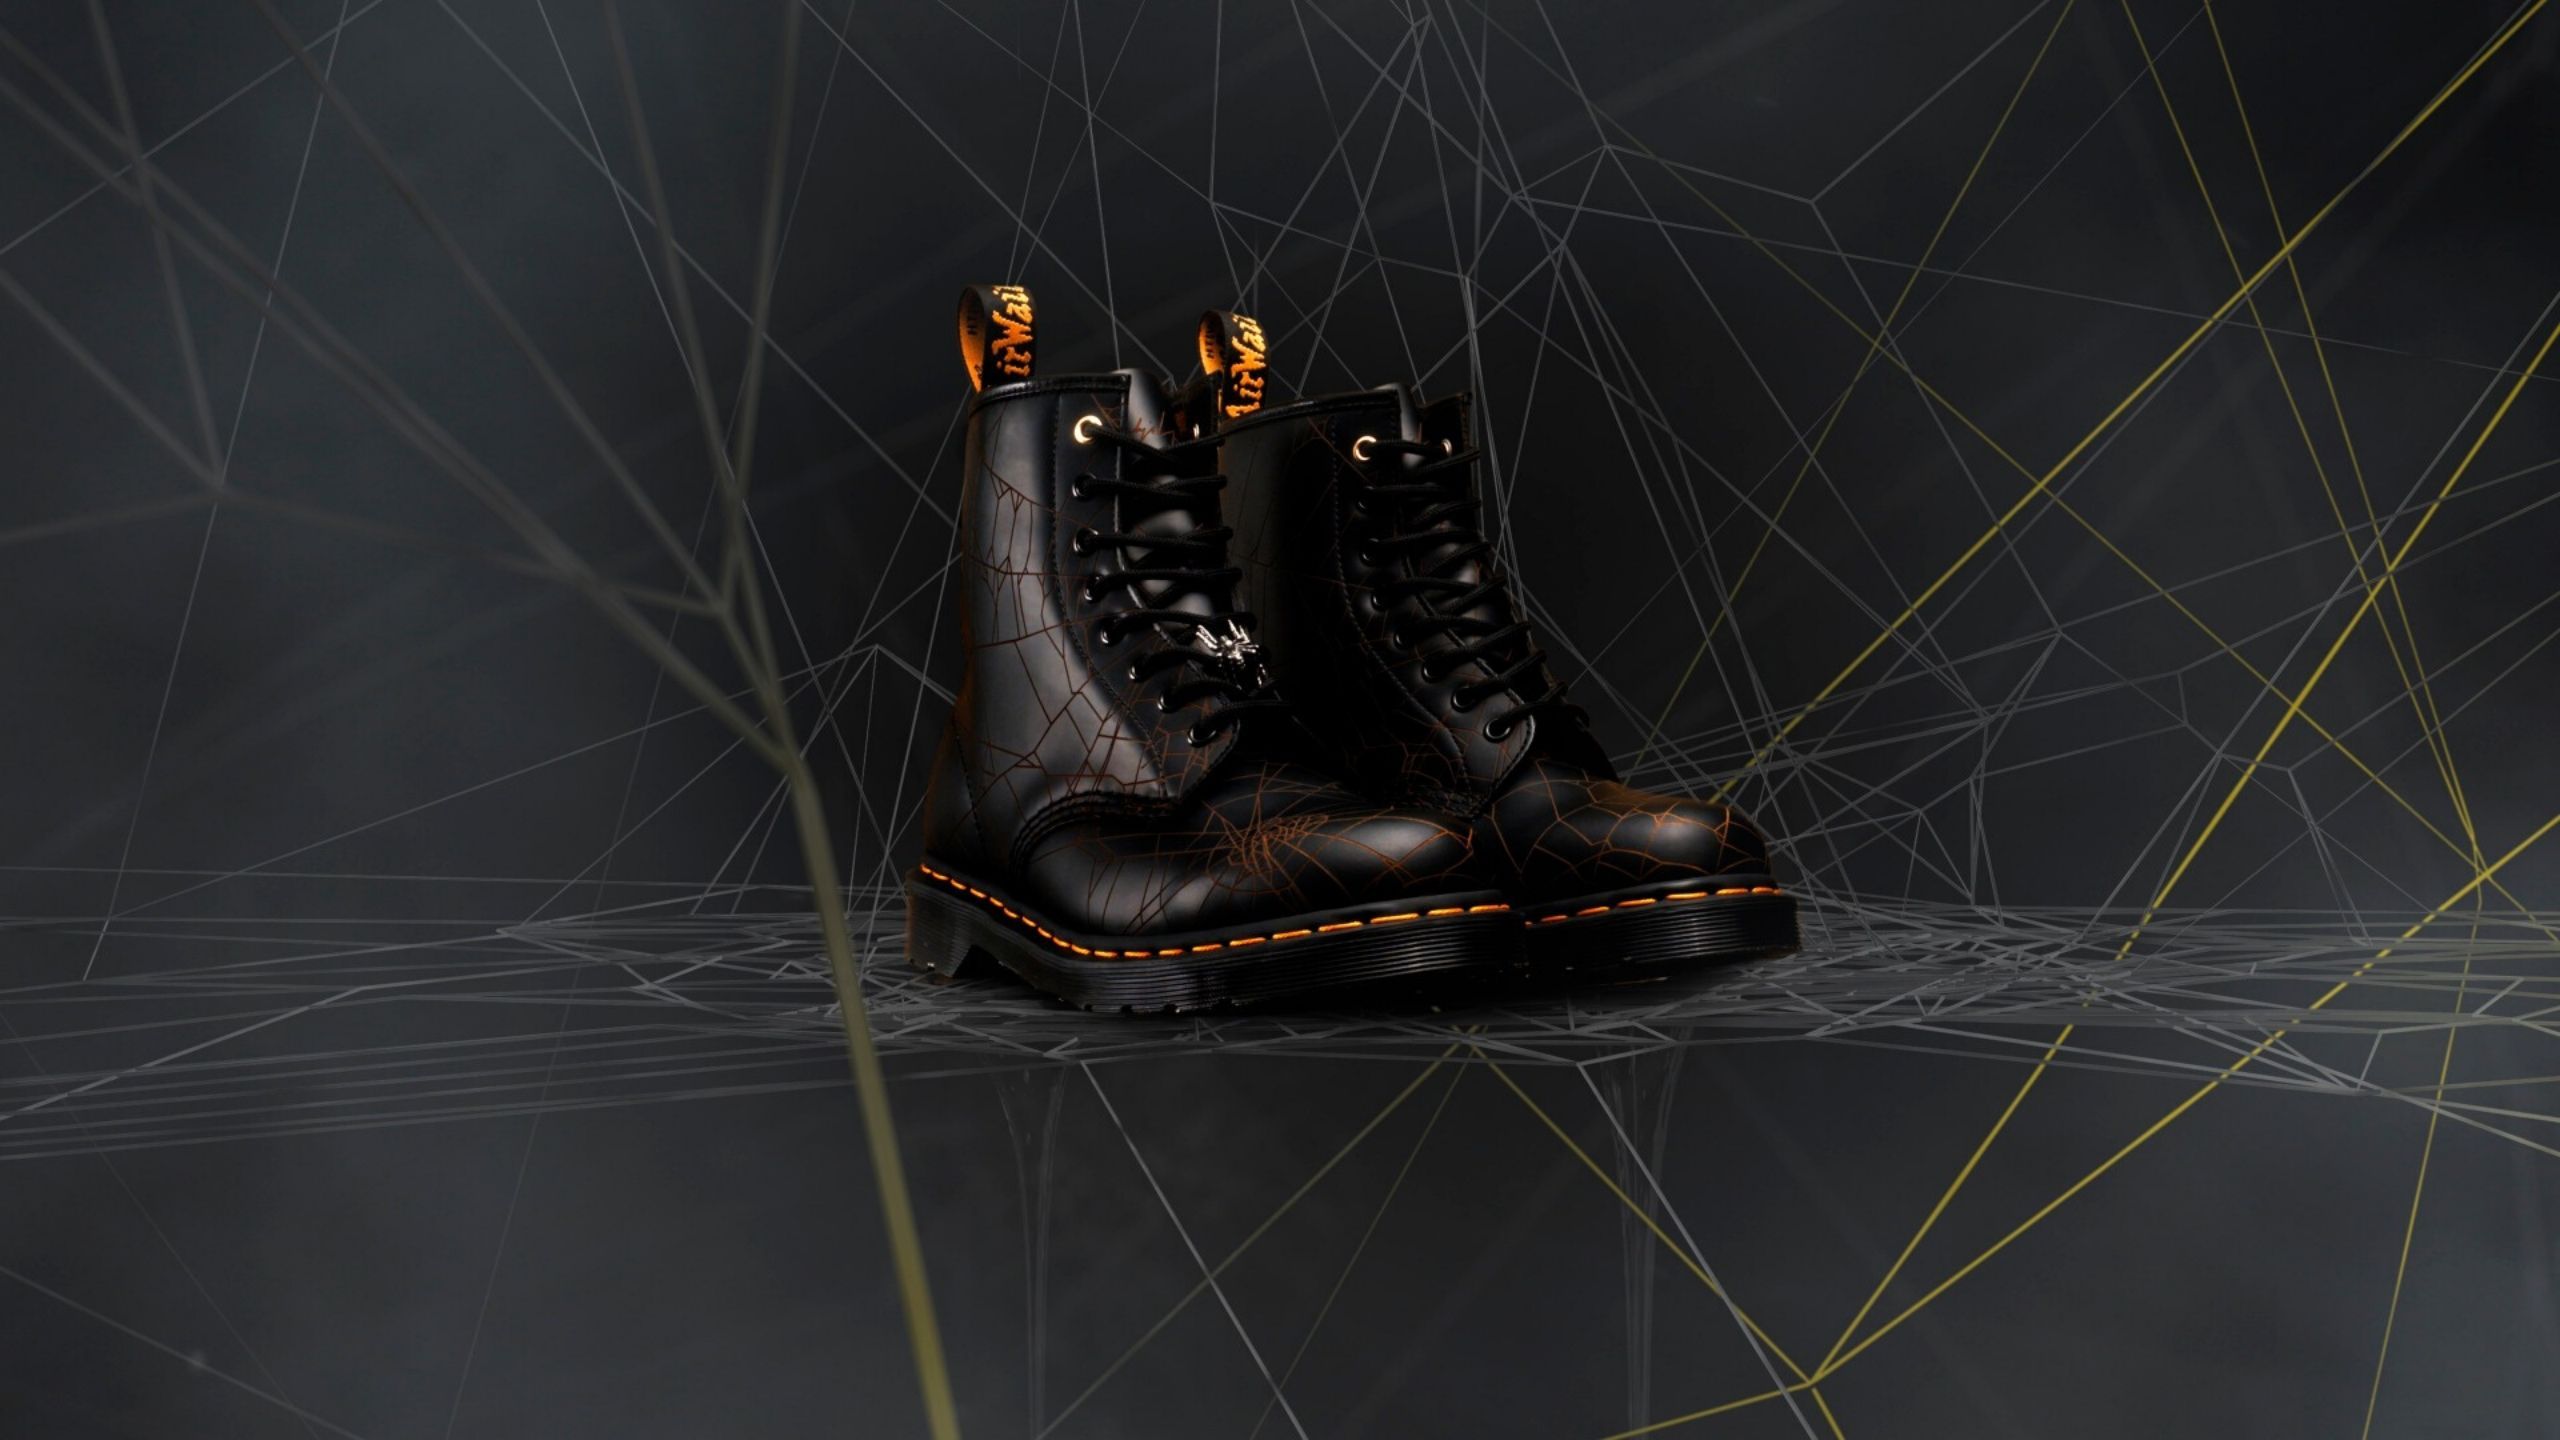 Yohji Yamamoto Reinterprets Dr Martens' Iconic Original 1460 Boots